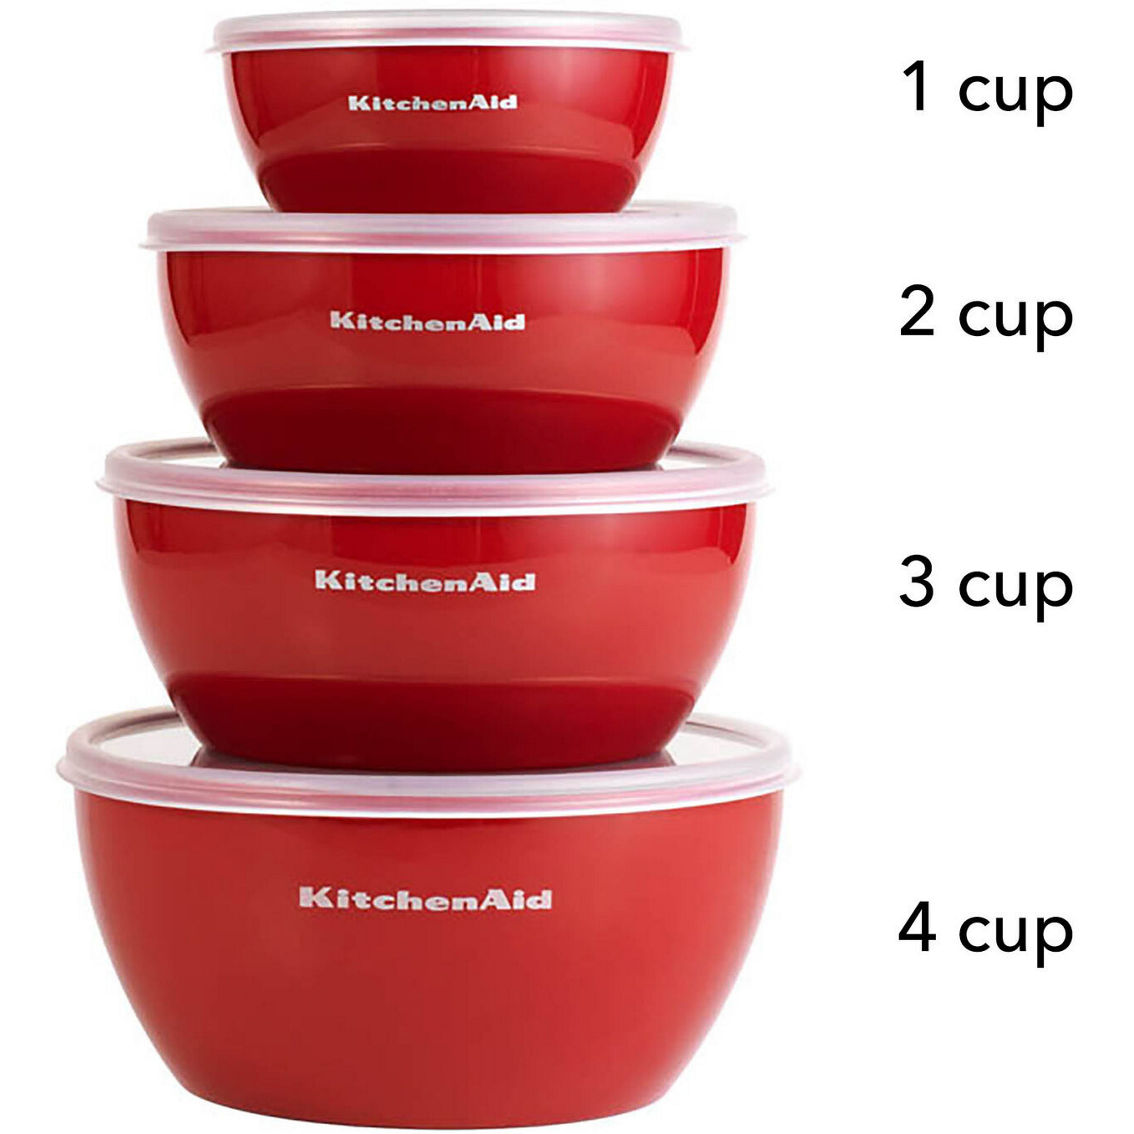 Kitchenaid Classic Prep Bowls 4 Pc. Set With Lids, Food Storage, Household